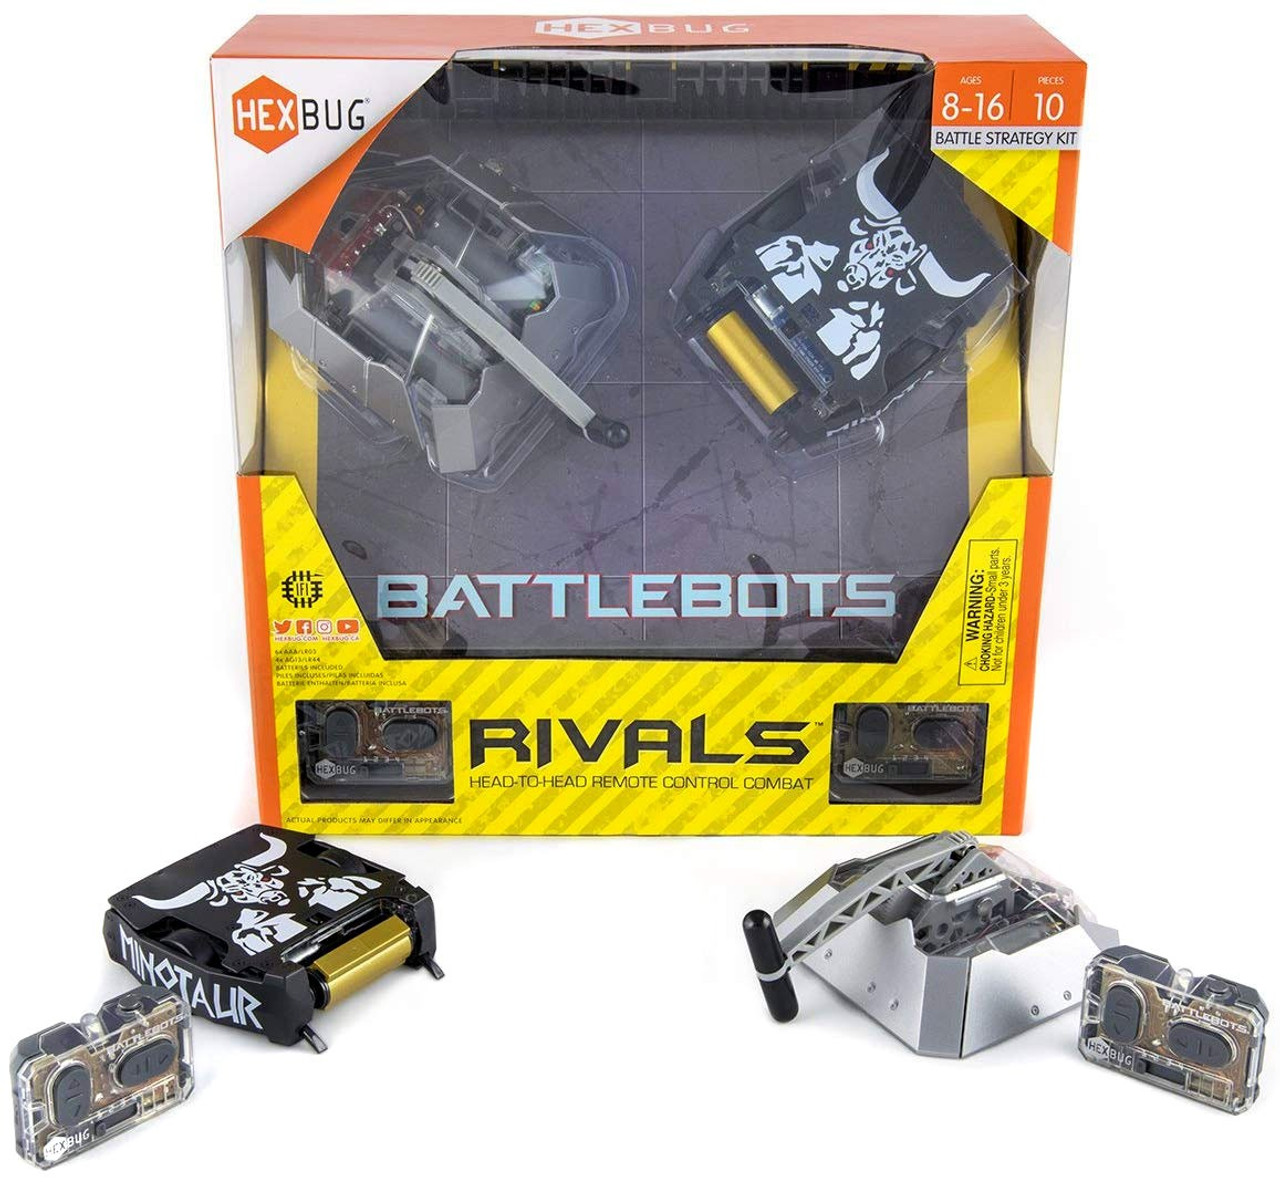 Hexbug Battlebots Rivals Beta Vs Minotaur Battle Strategy Kit Innovation First Toywiz - sword fighting gfx roblox amino